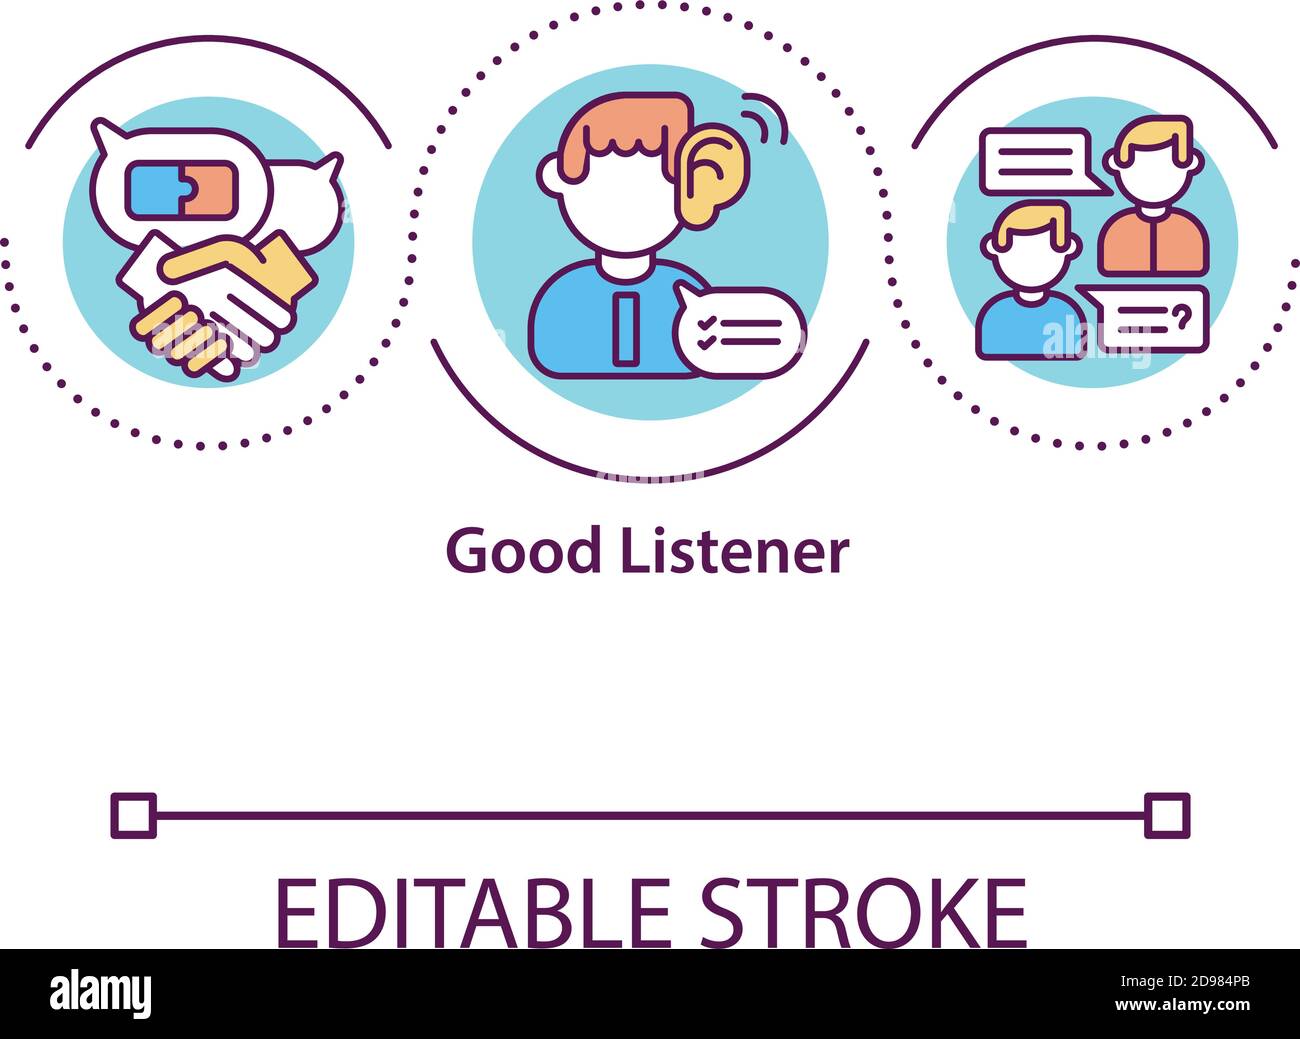 Good listener concept icon Stock Vector